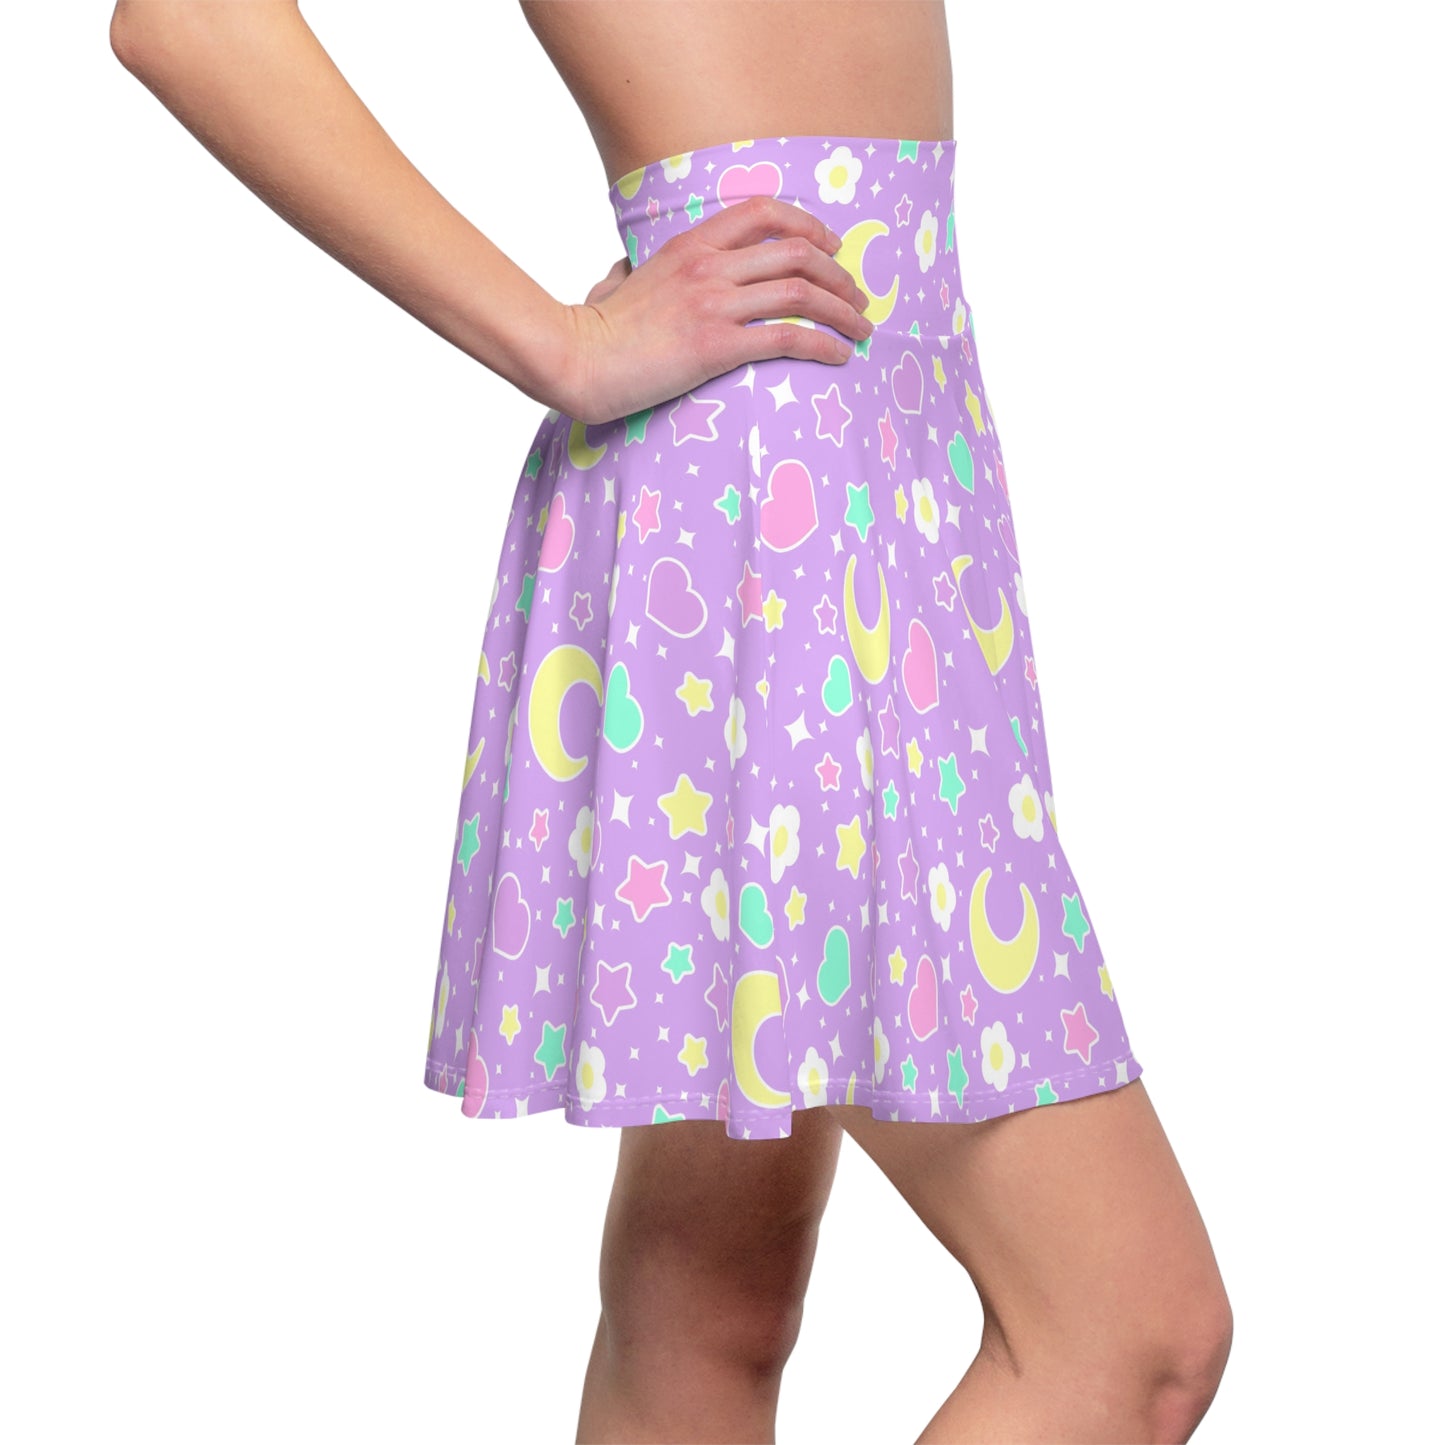 Magical Spring Purple High Waist Skater Skirt